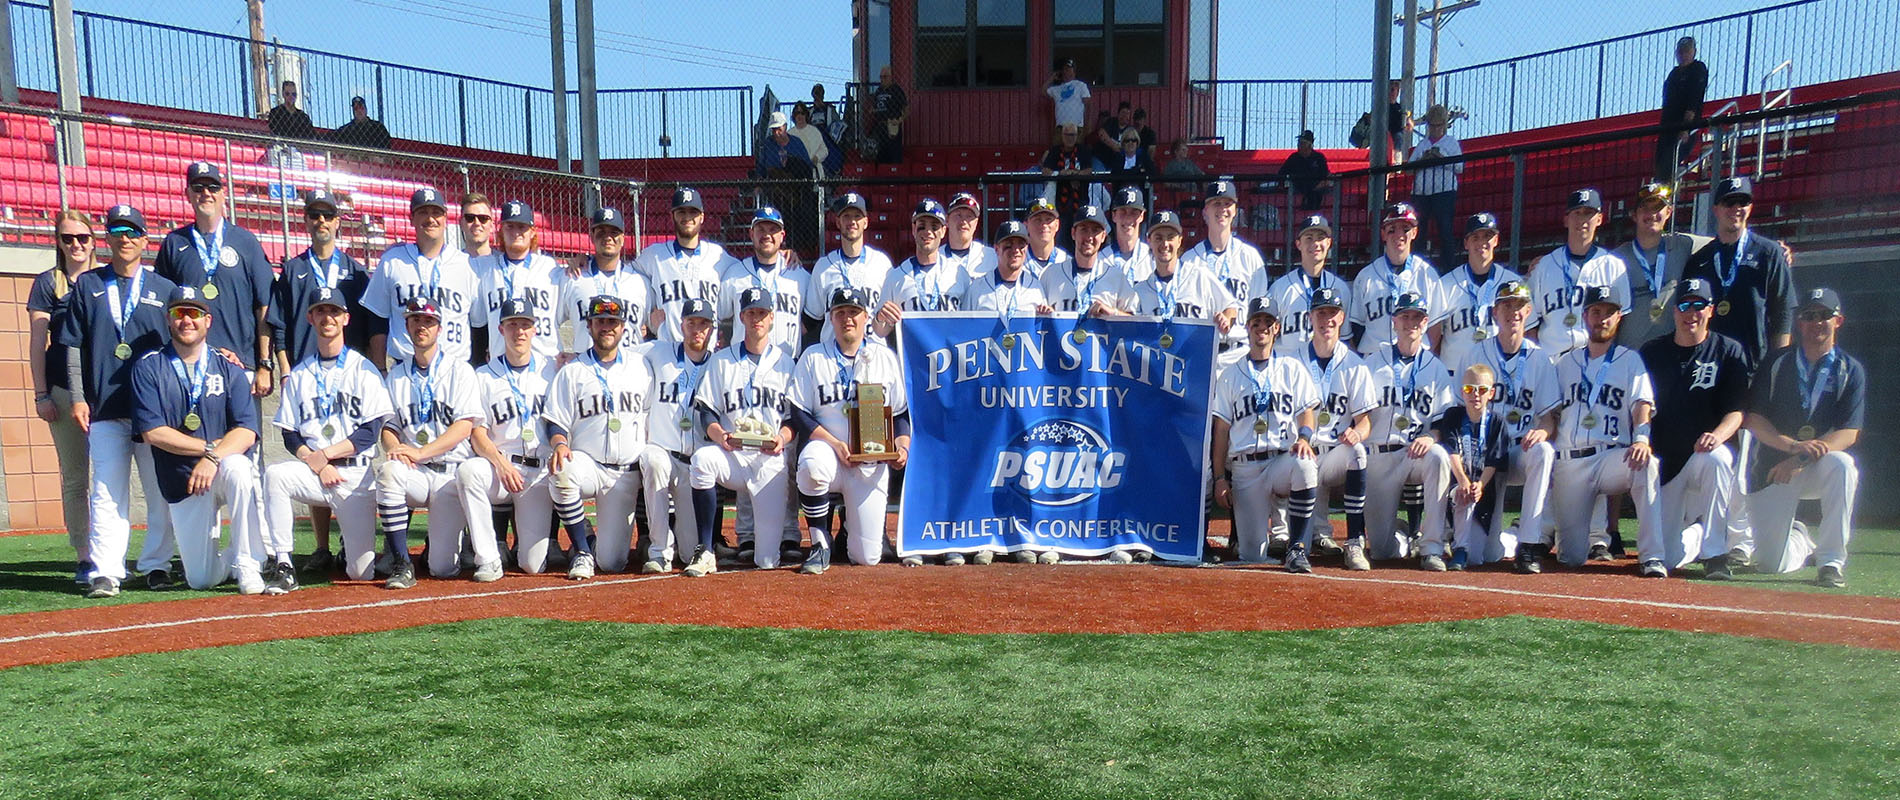 Penn State DuBois baseball won the 2019 PSUAC Baseball Championship, their second consecutive title.